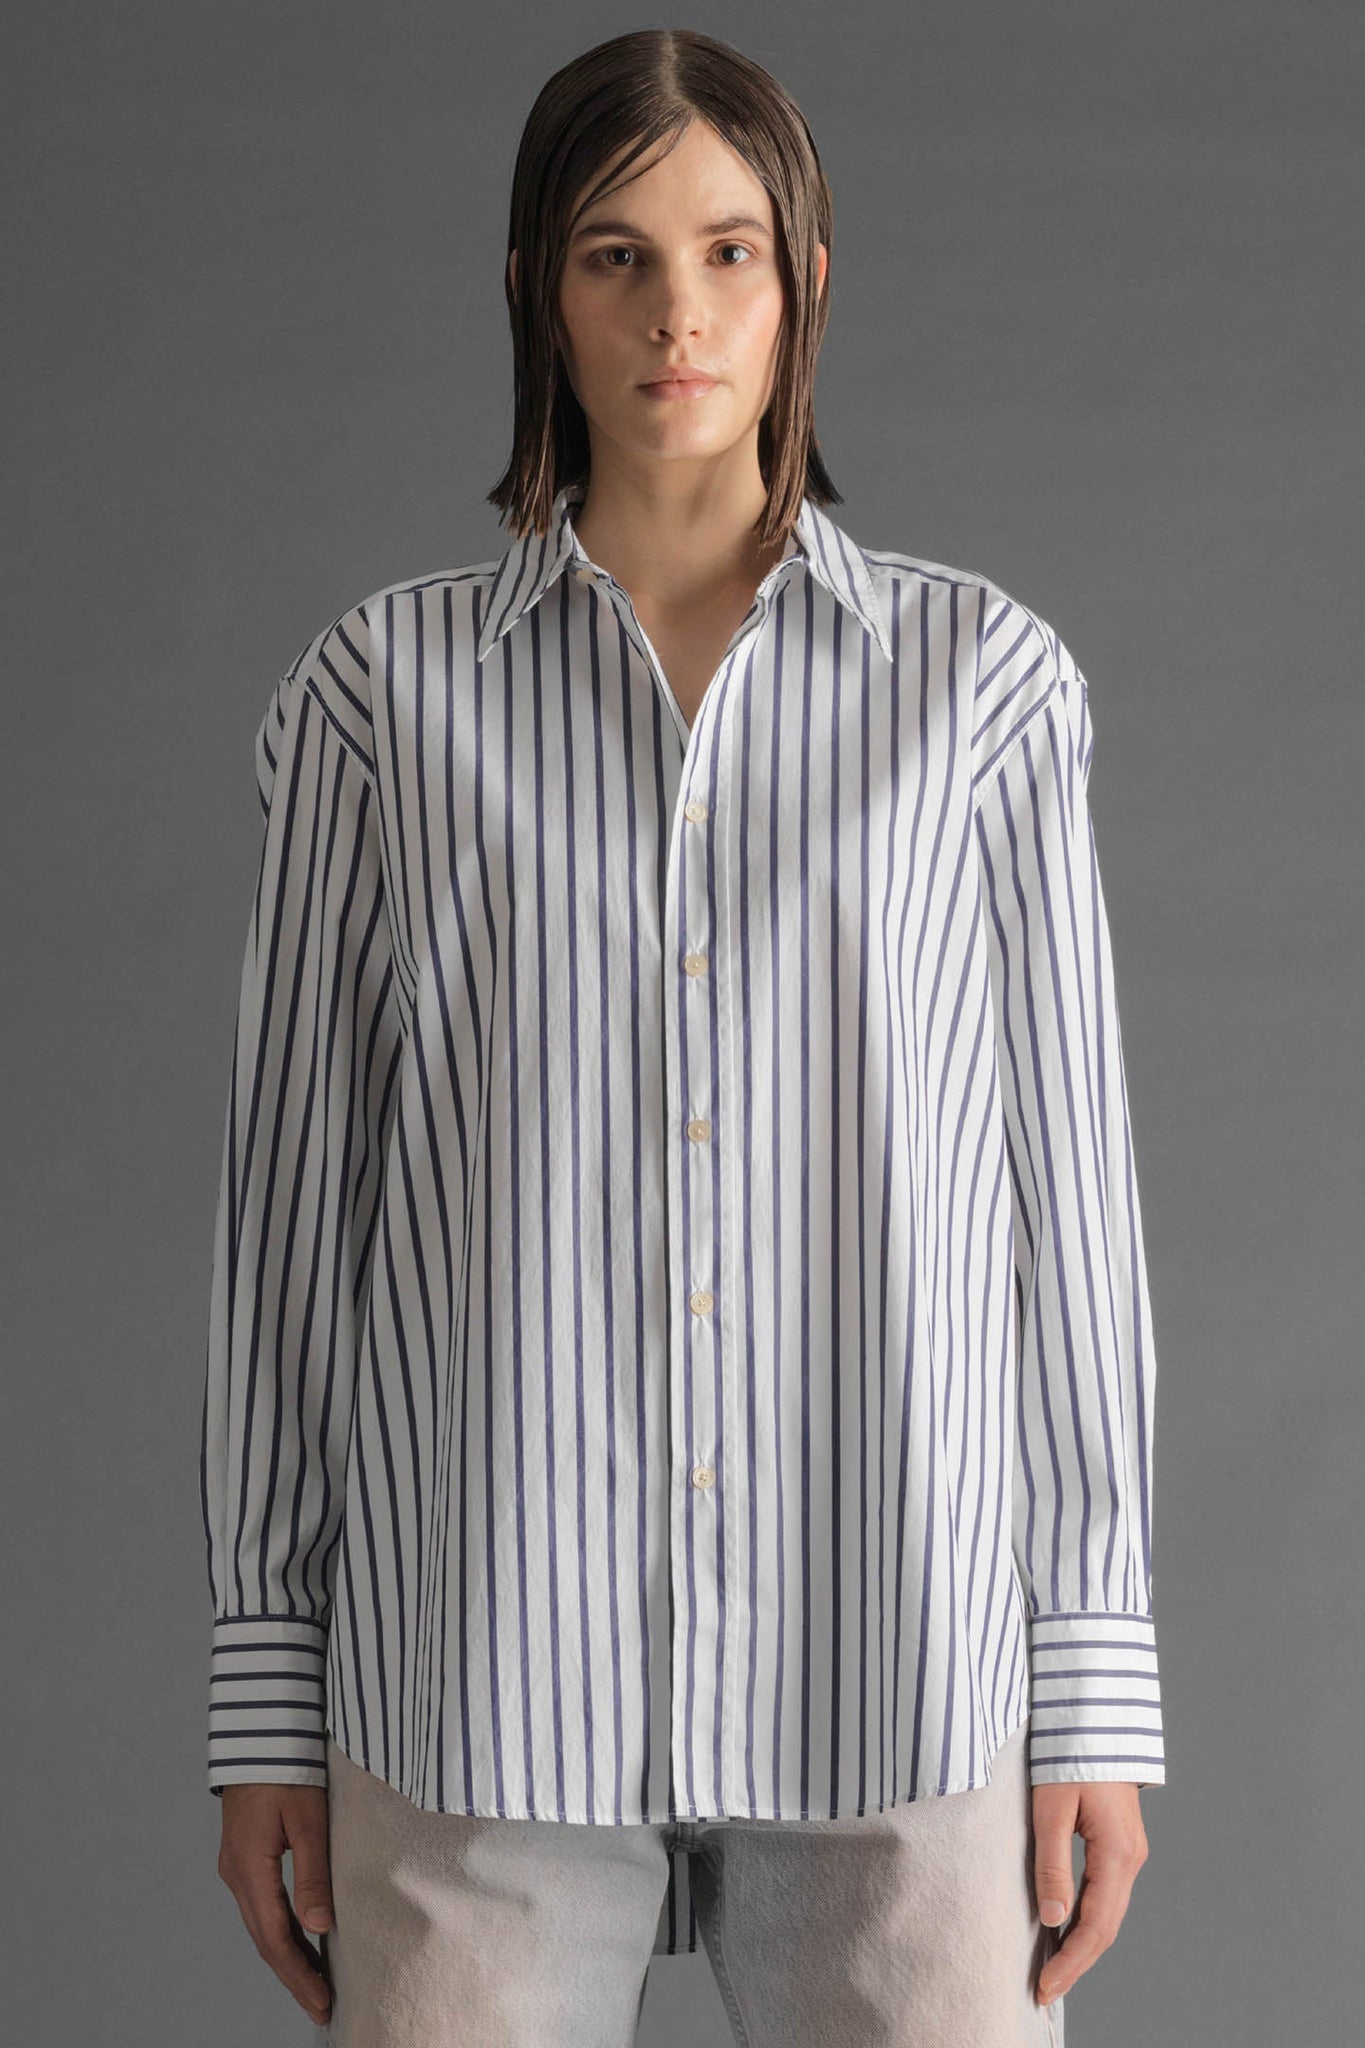 Bon shirt by Hope - dark navy stripe